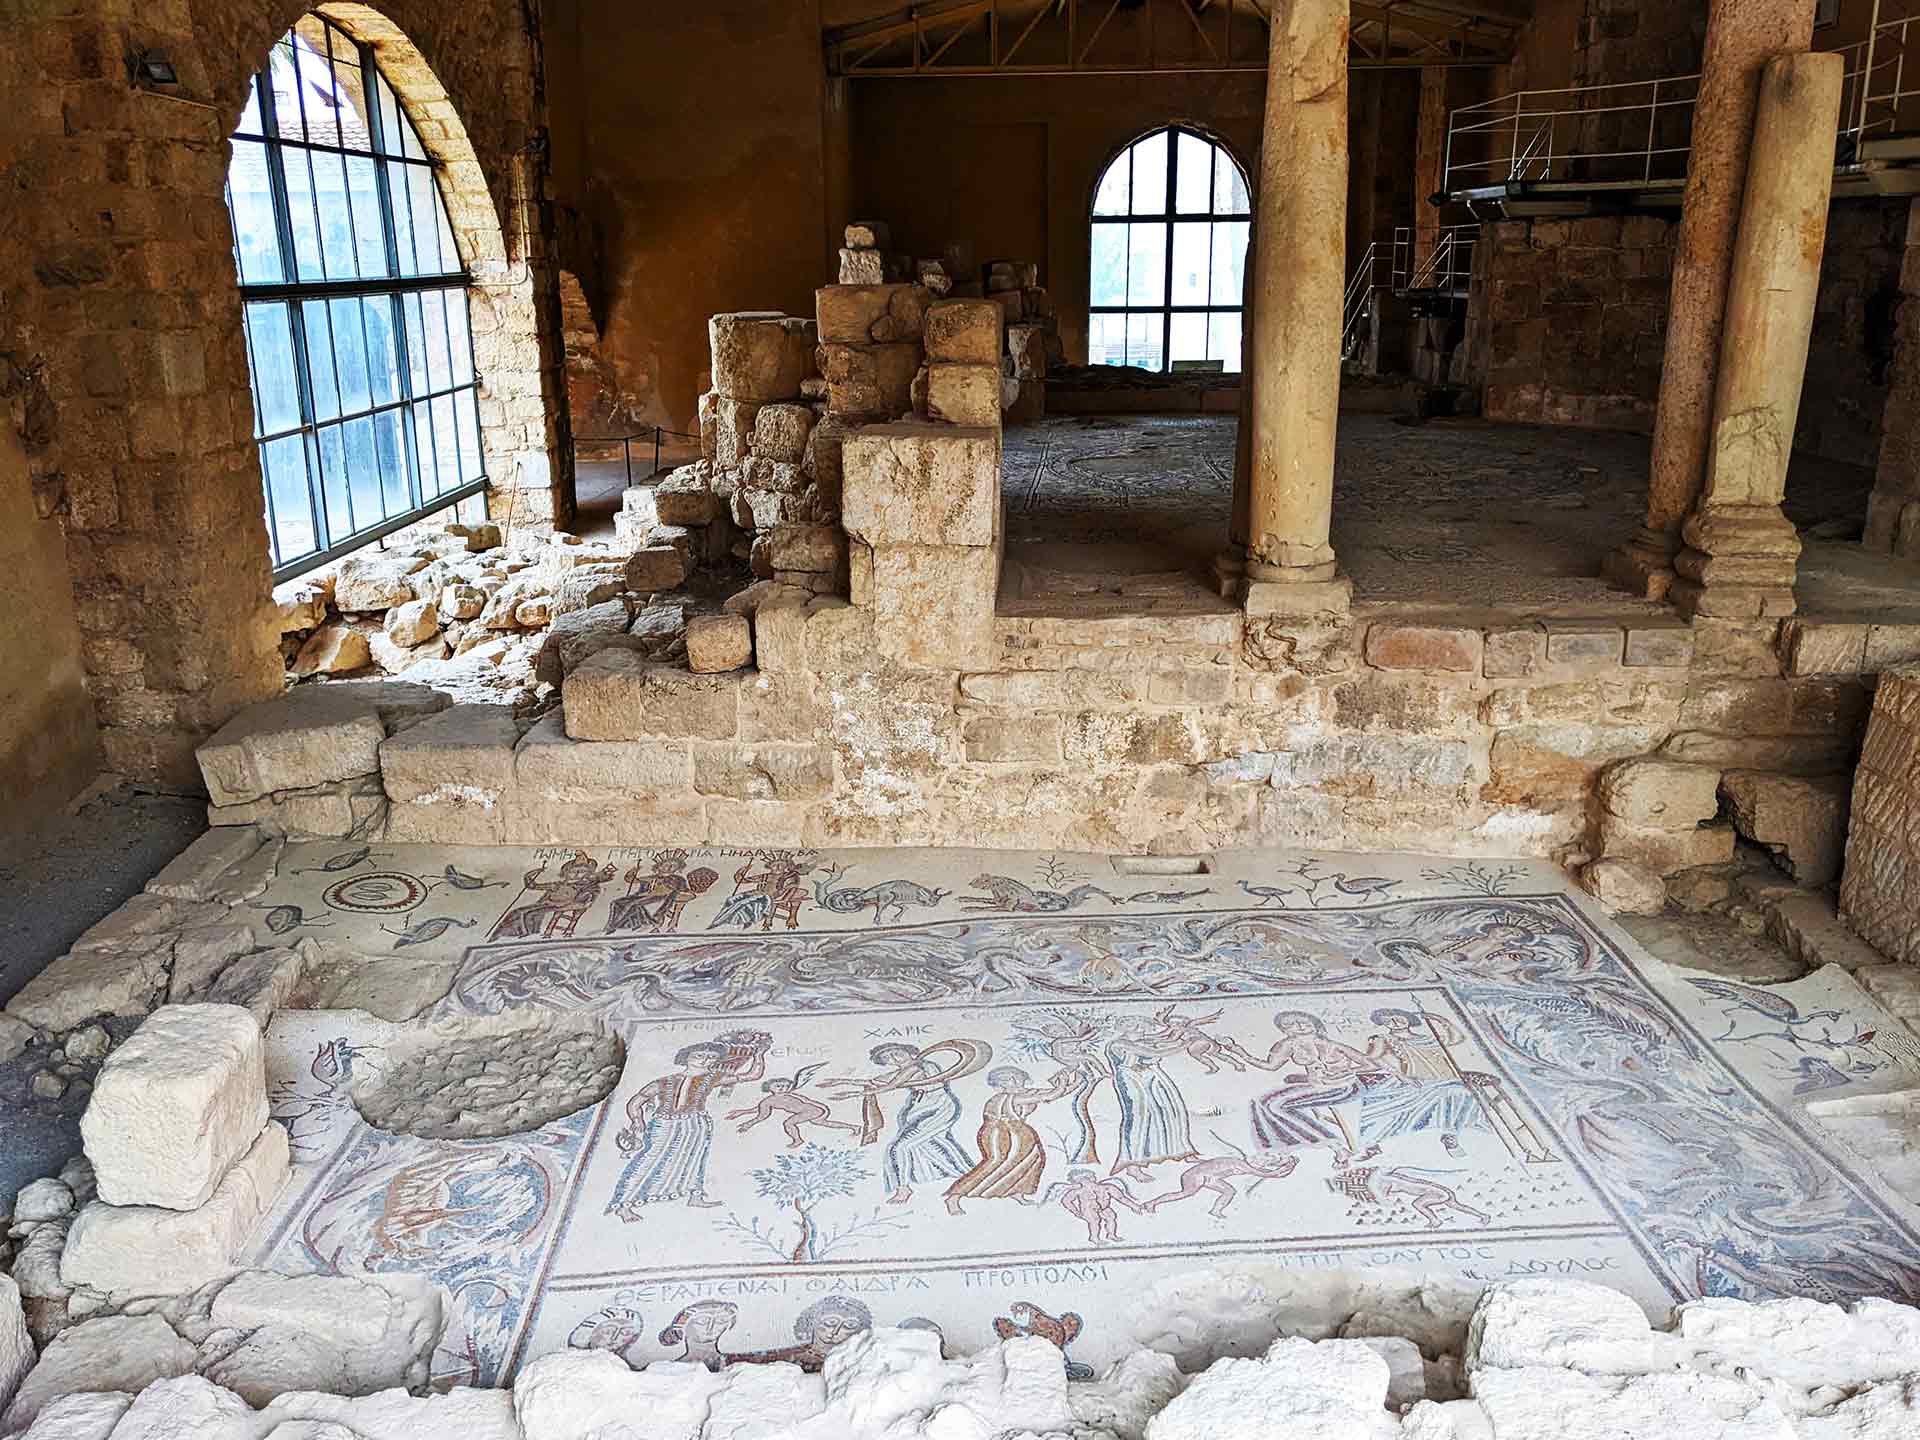 Mosaic floor of the Church of the Virgin Mary in Madaba, Jordan